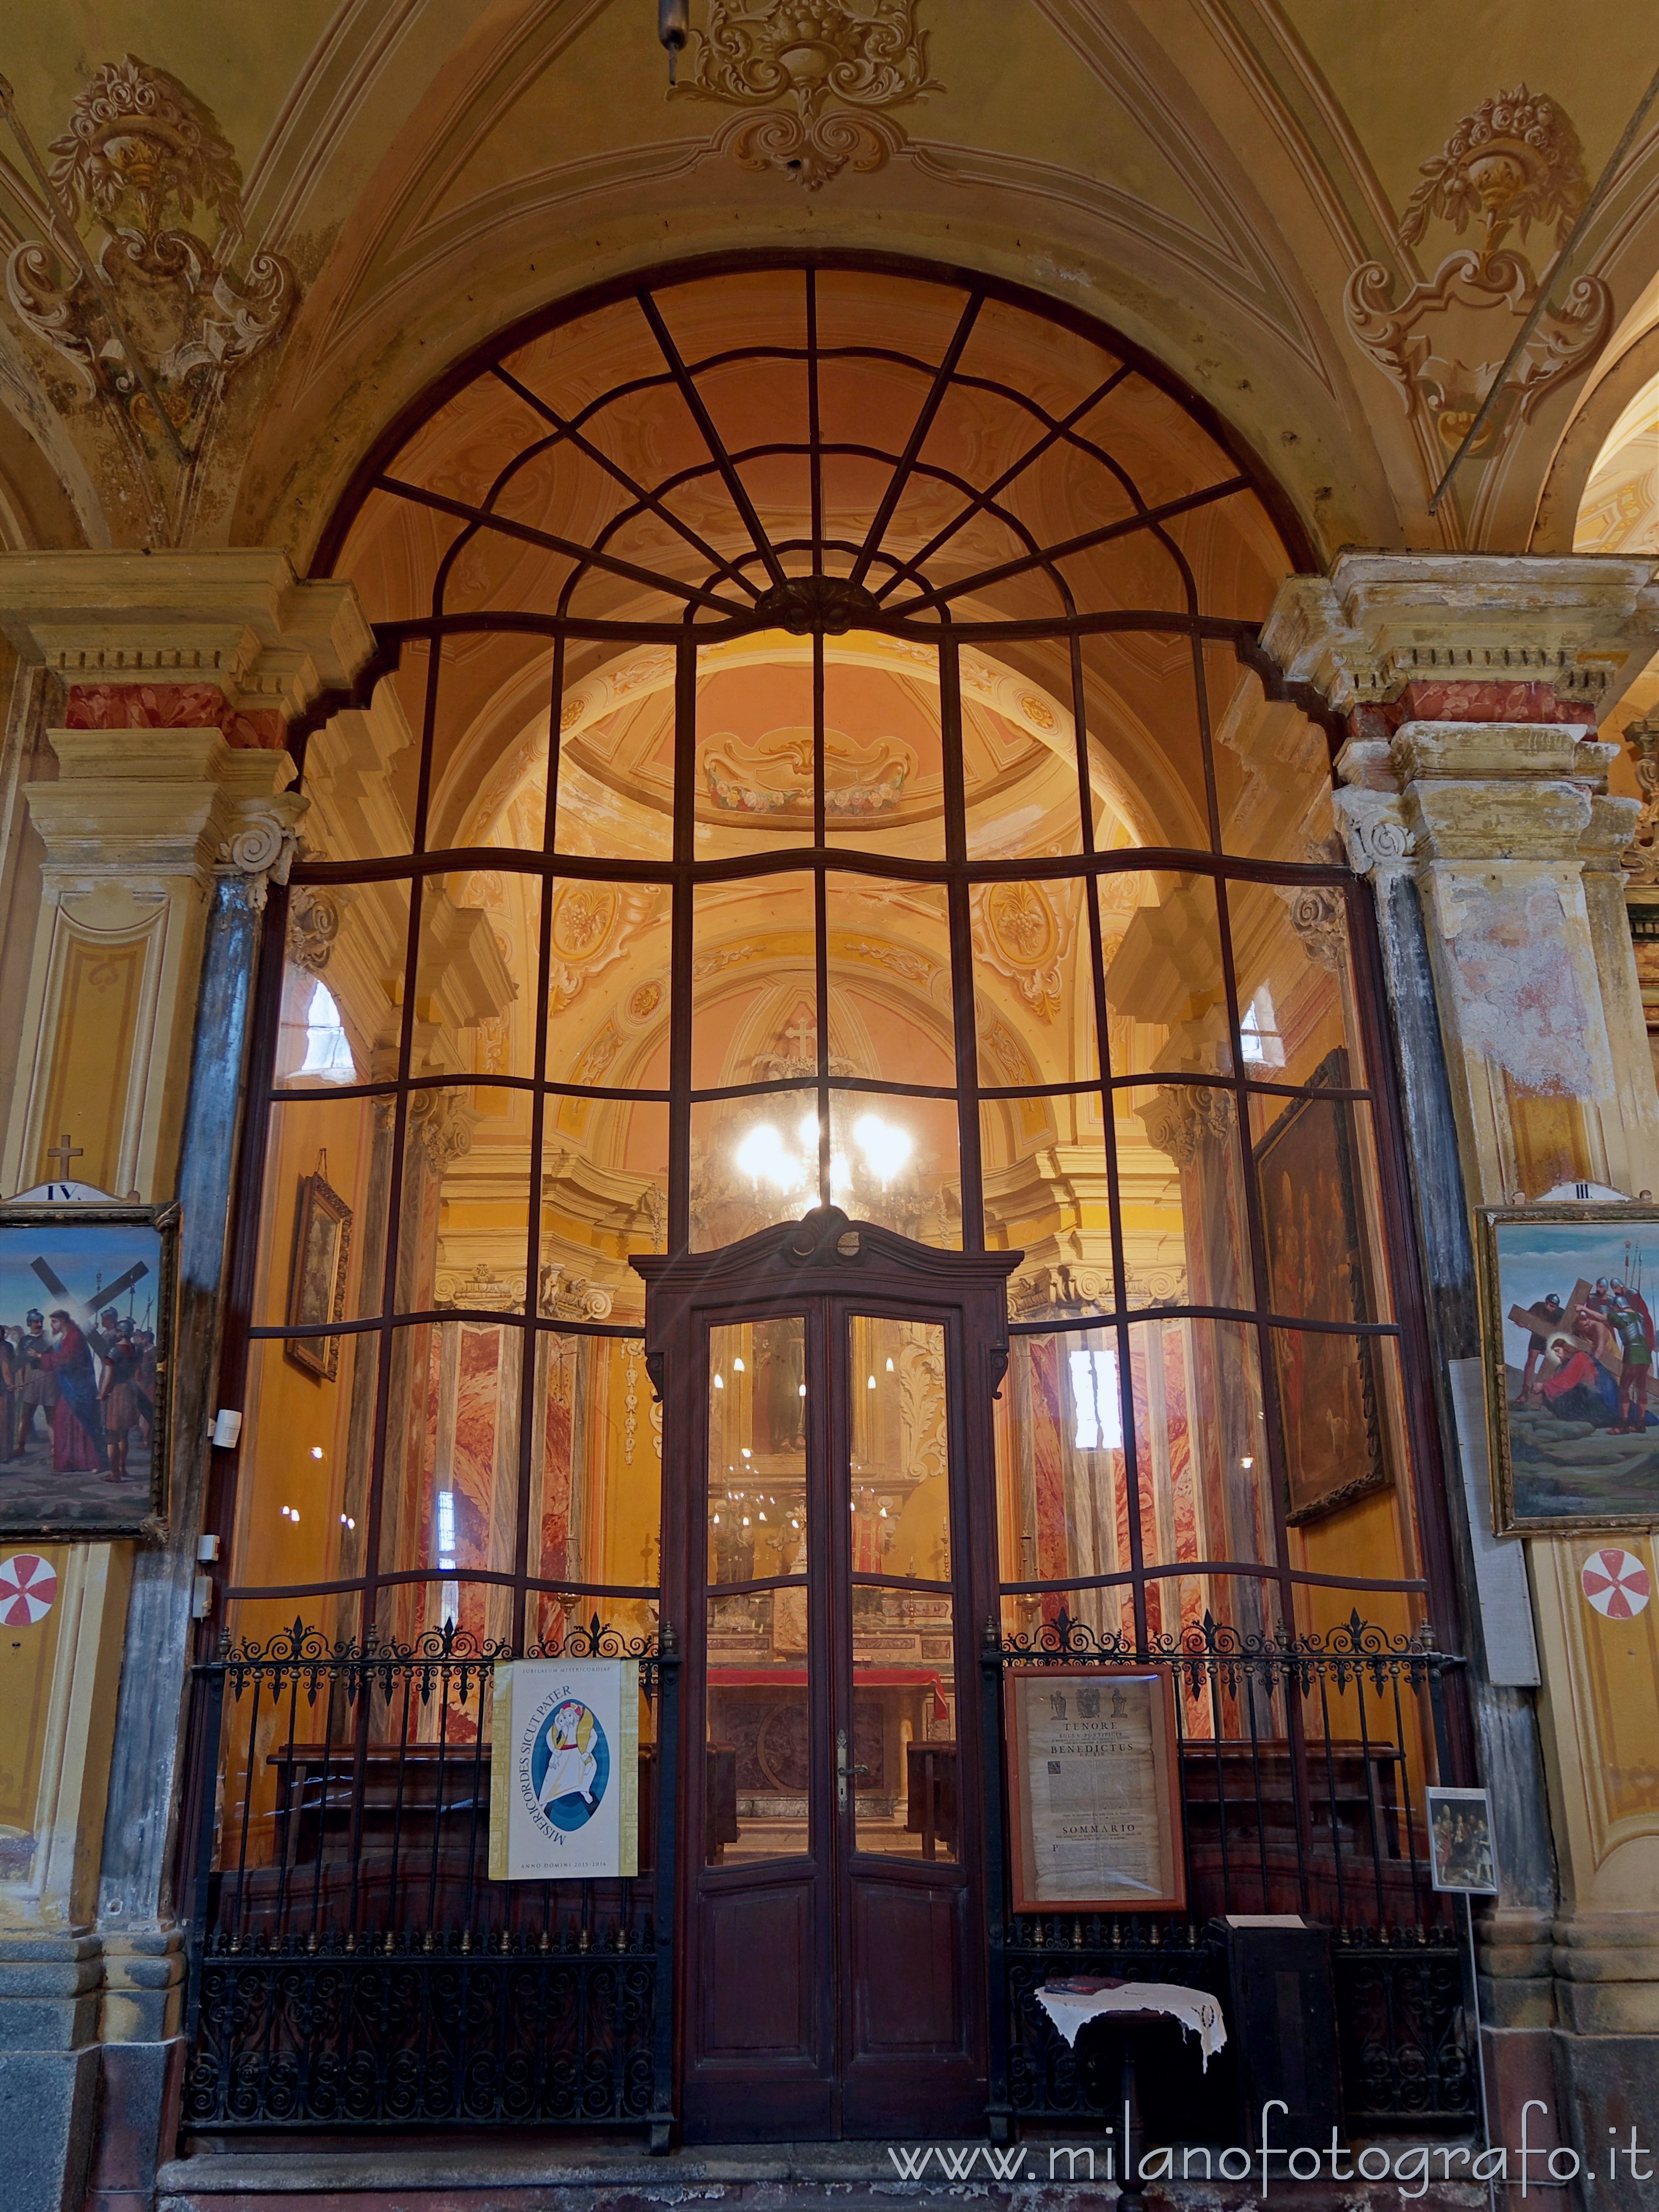 Campiglia Cervo (Biella, Italy): Sant'Antonio Chapel inside the Parish Church of the Saints Bernhard und Joseph - Campiglia Cervo (Biella, Italy)